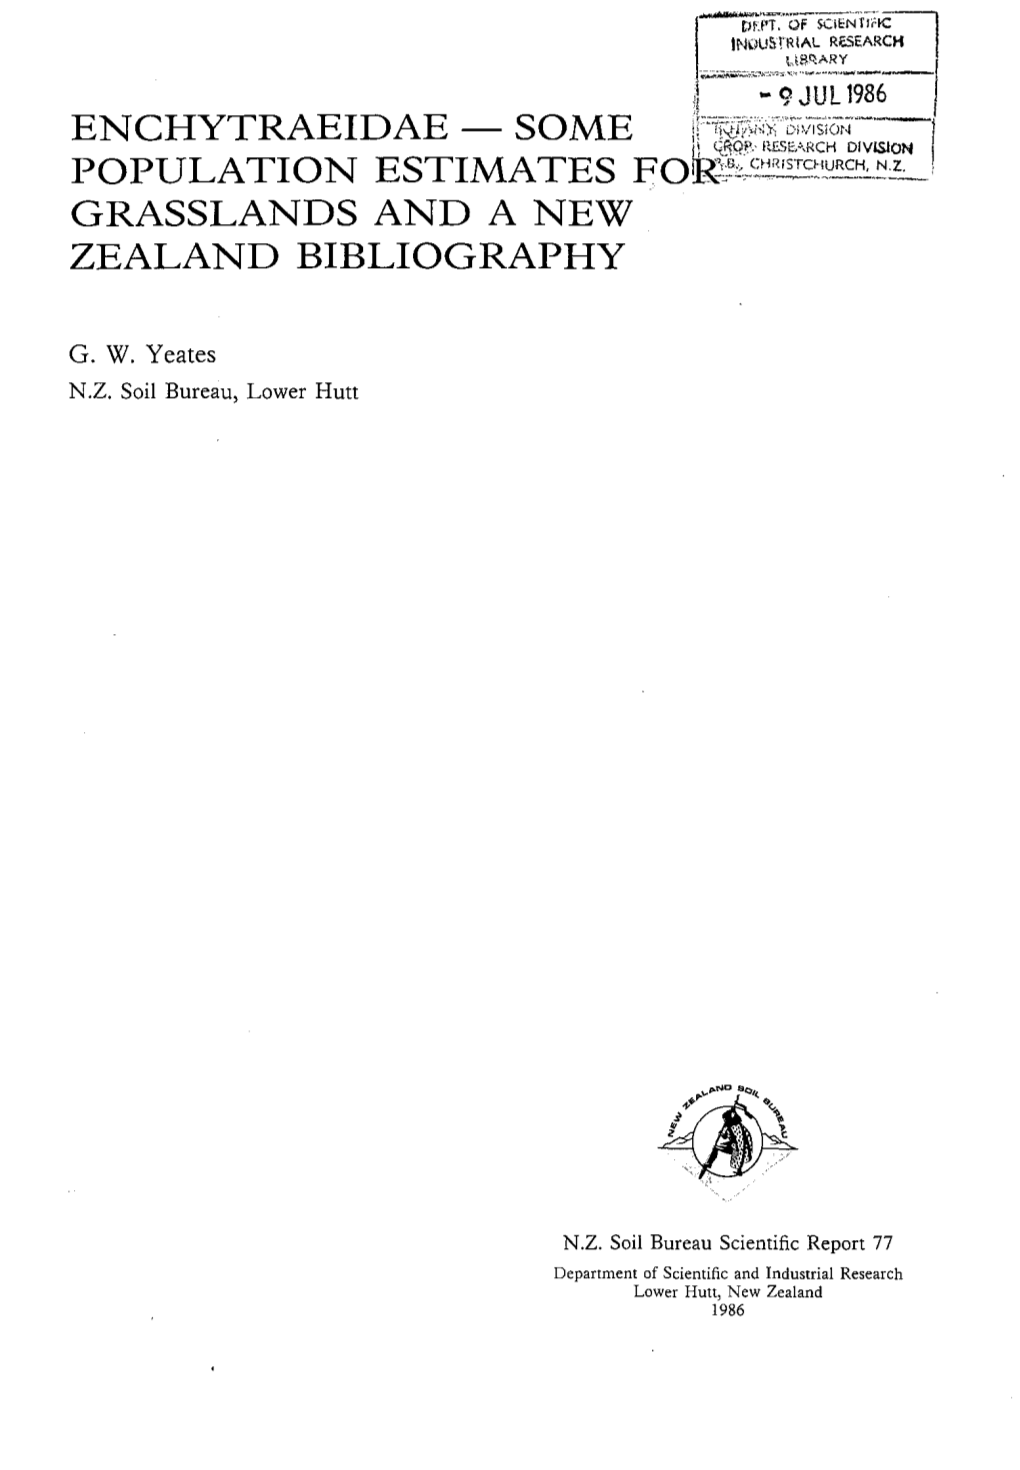 Enchytraeidae - Some Population Estimates for Grasslands and a New Zealand Bibliography N.Z